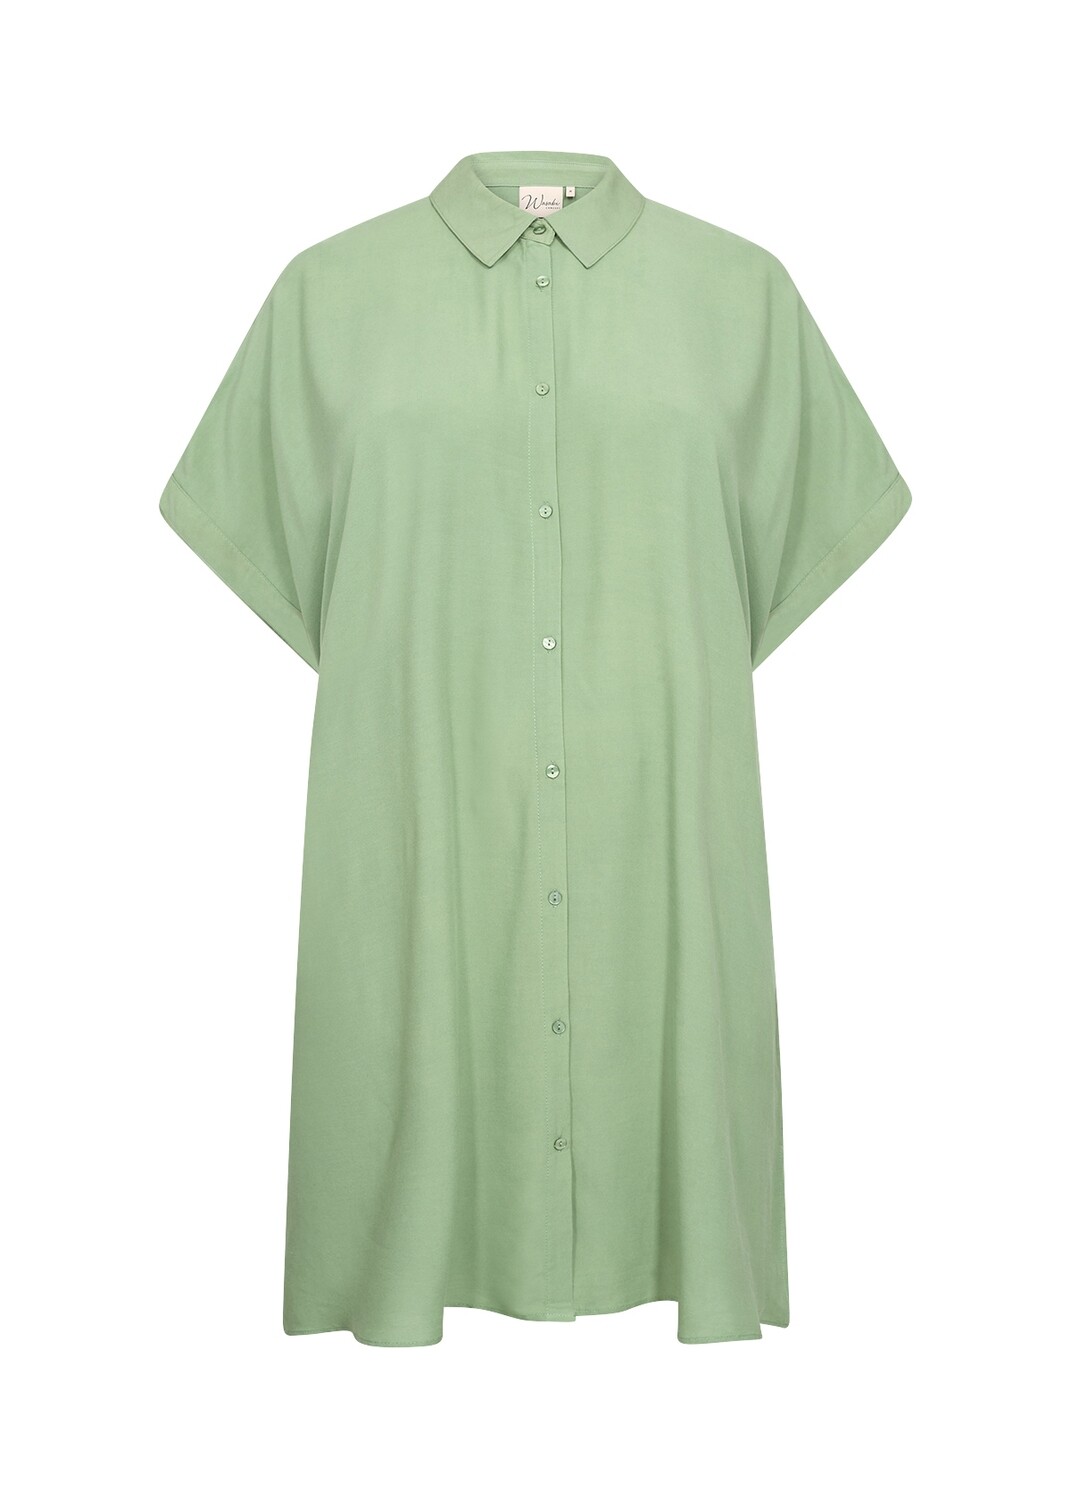 Wasabi blouse groen Sia5 w10027, Size: 1 (42-44 )